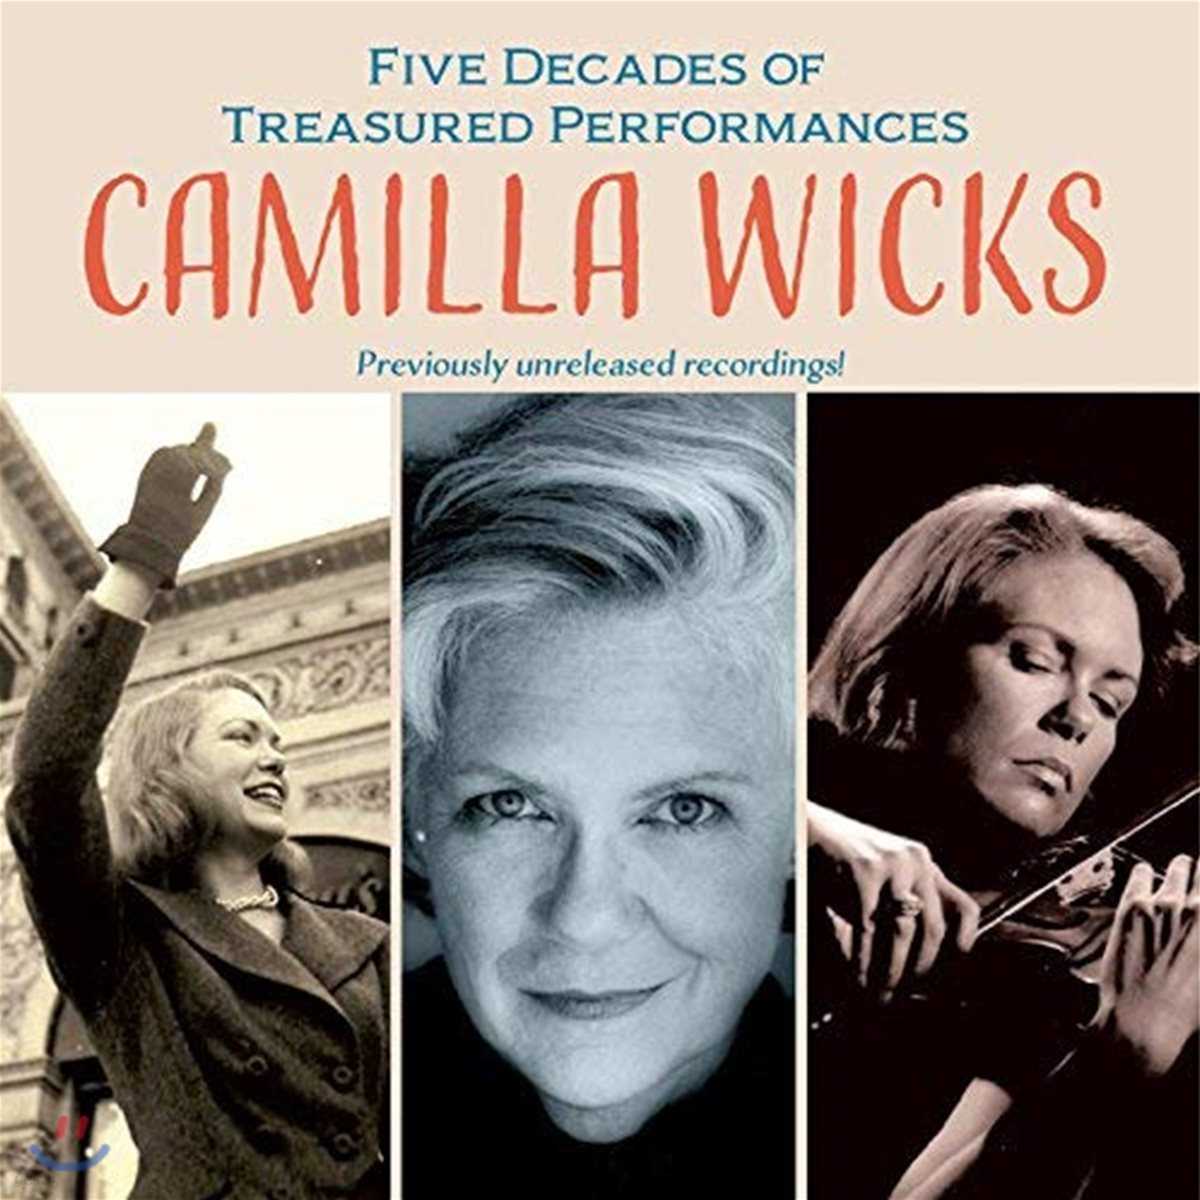 Camilla Wicks 카밀라 윅스 명연주 모음집 (Five Decades of Treasured Performances)